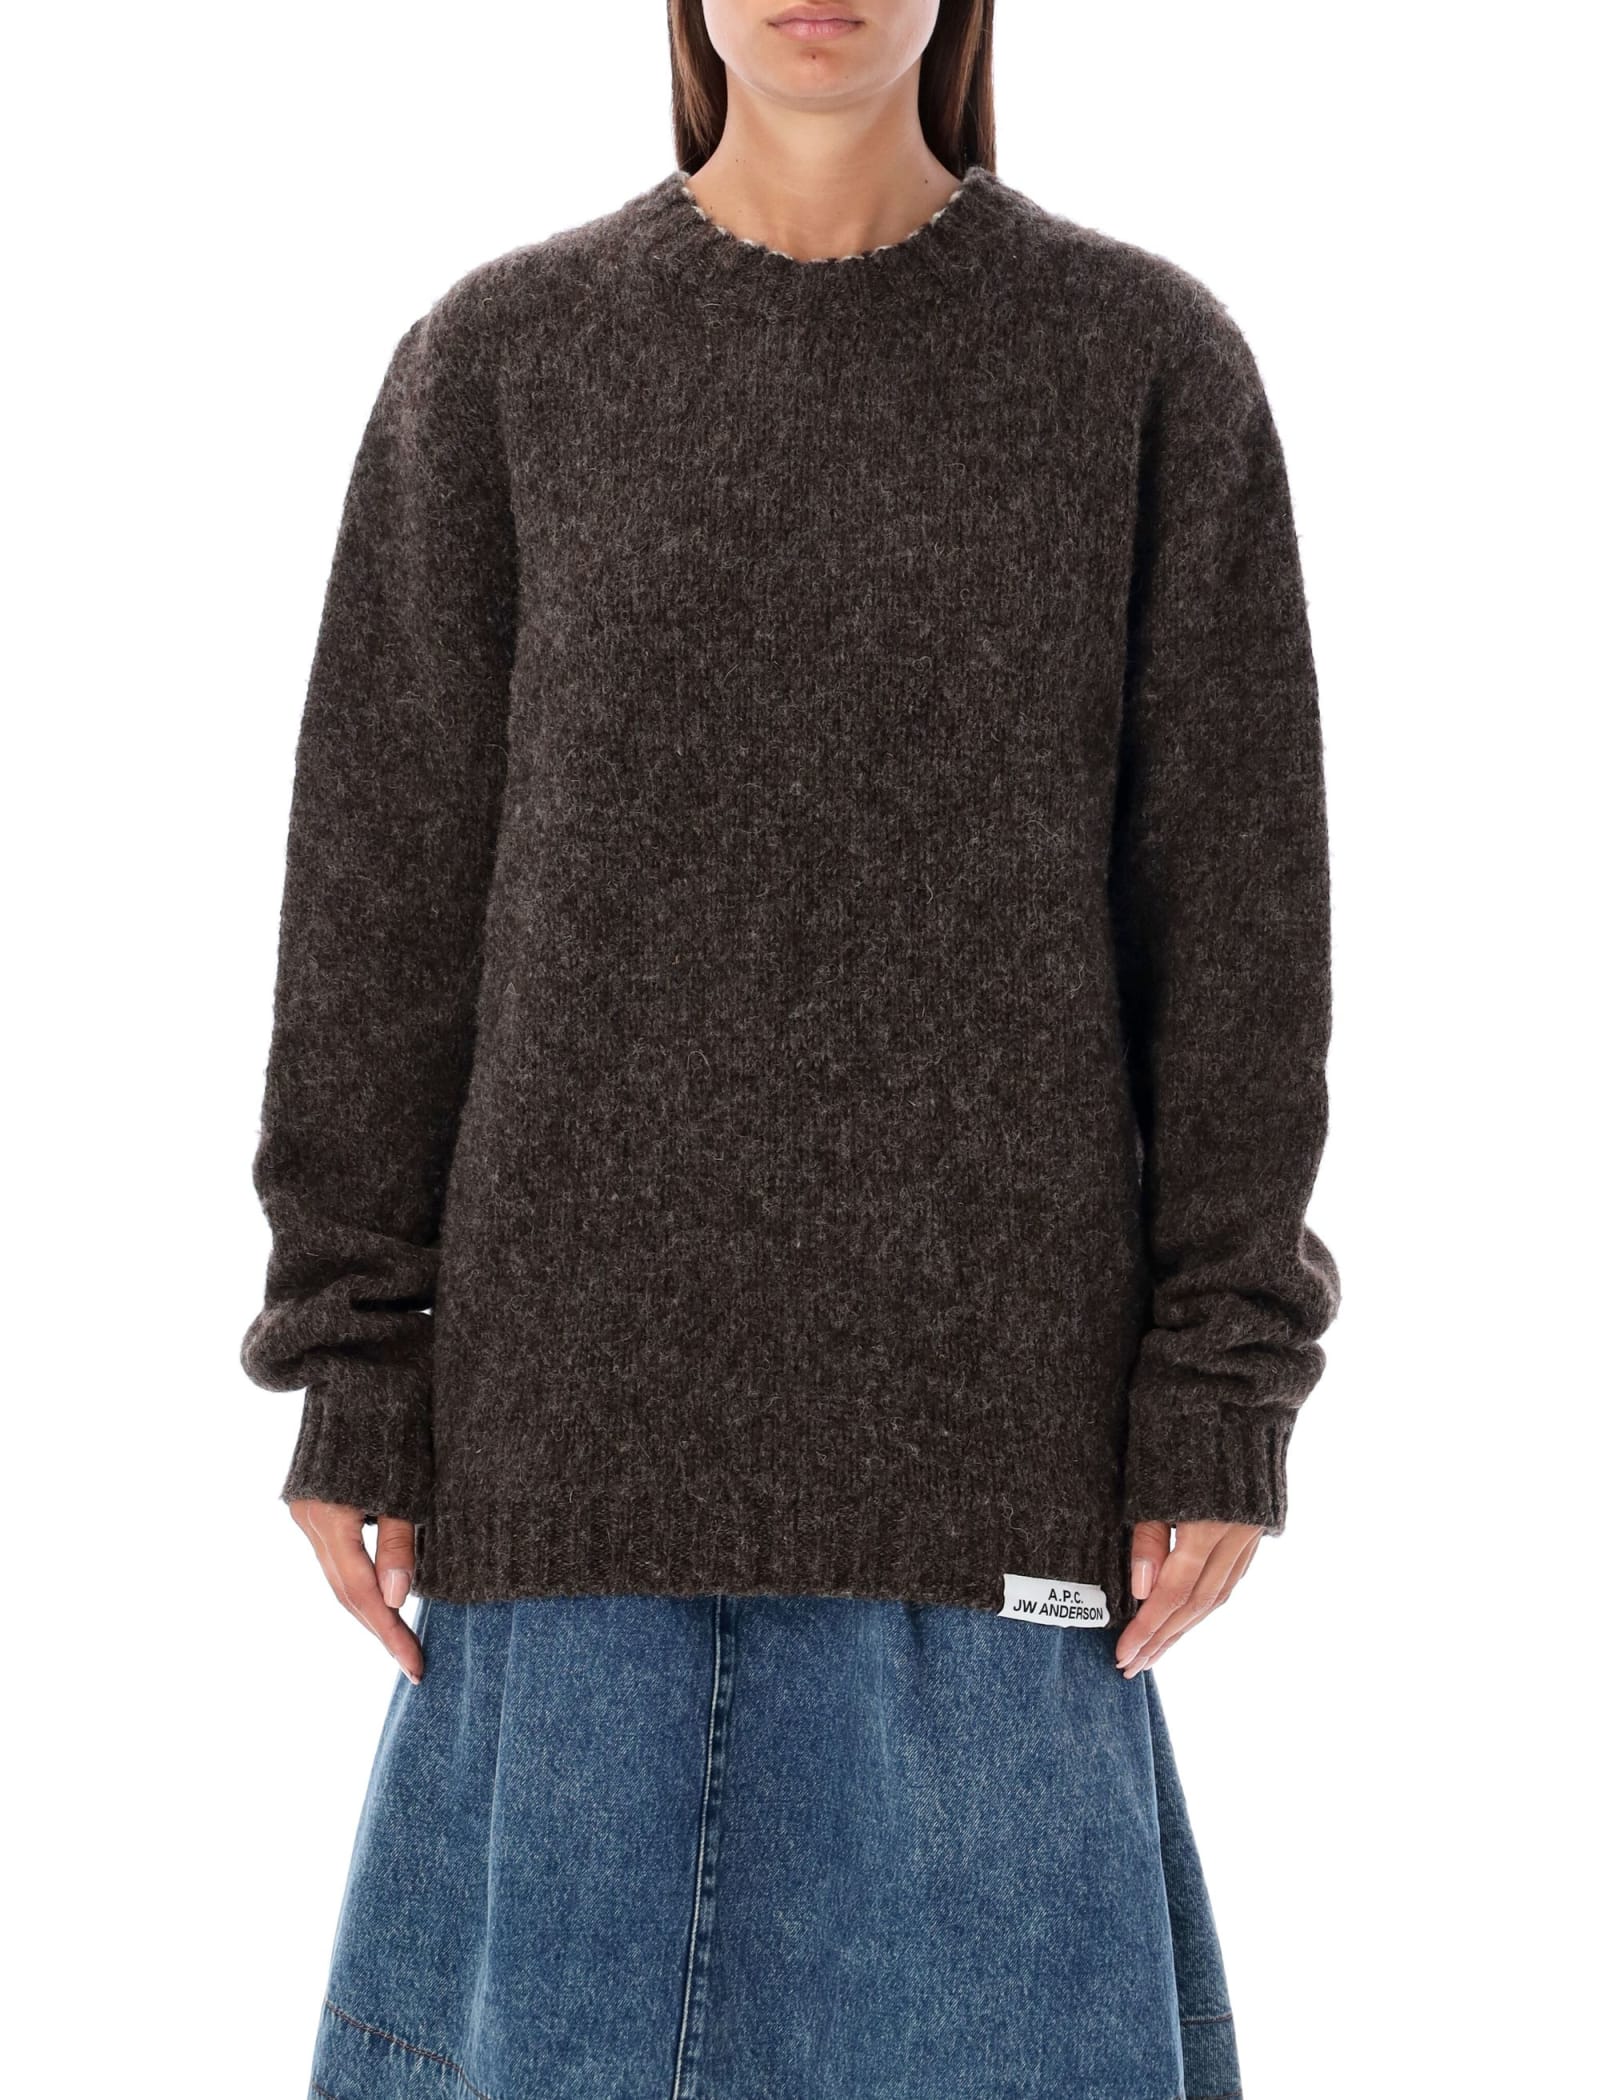 Ange Wool Sweater